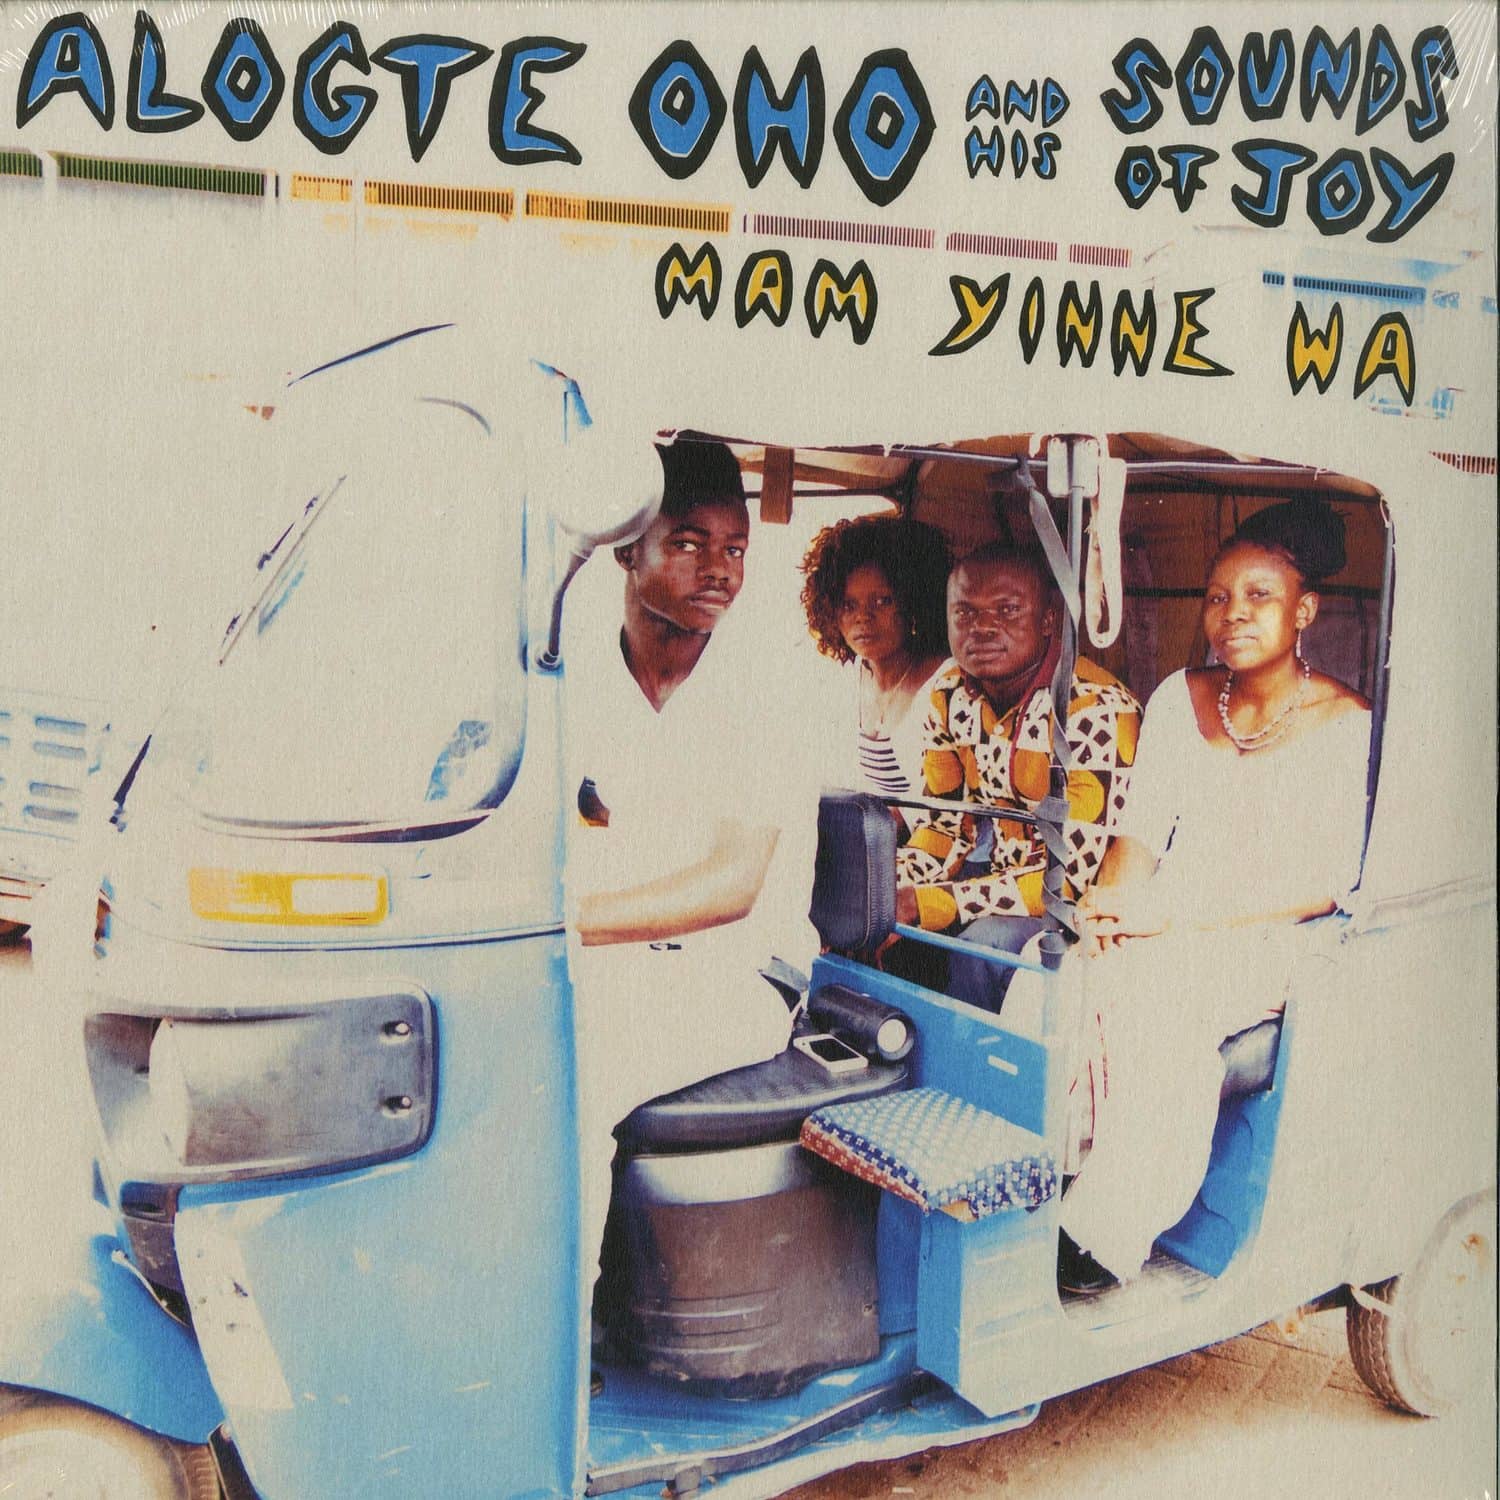 Alogte Oho & His Sounds of Joy - MAM YINNE WA 